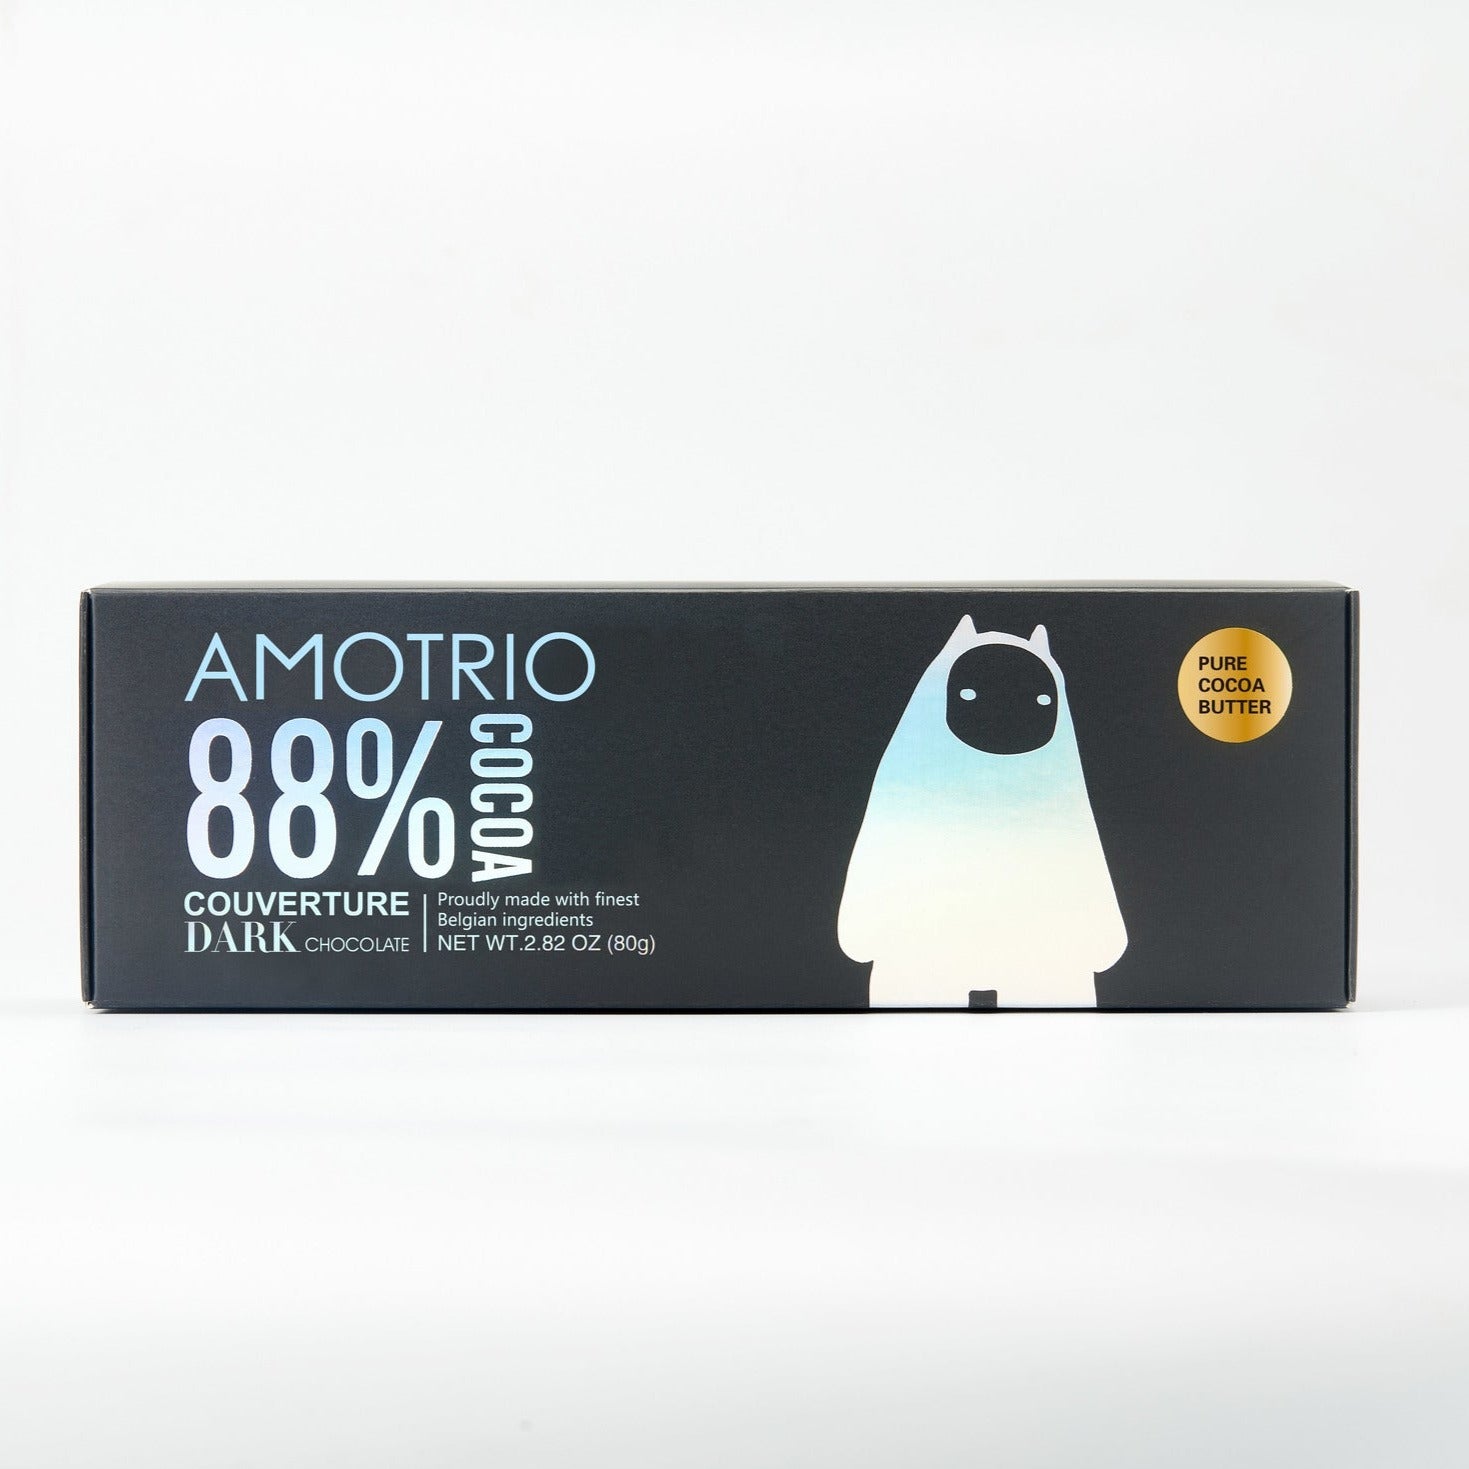 Amotrio 88% Couverture Dark Chocolate